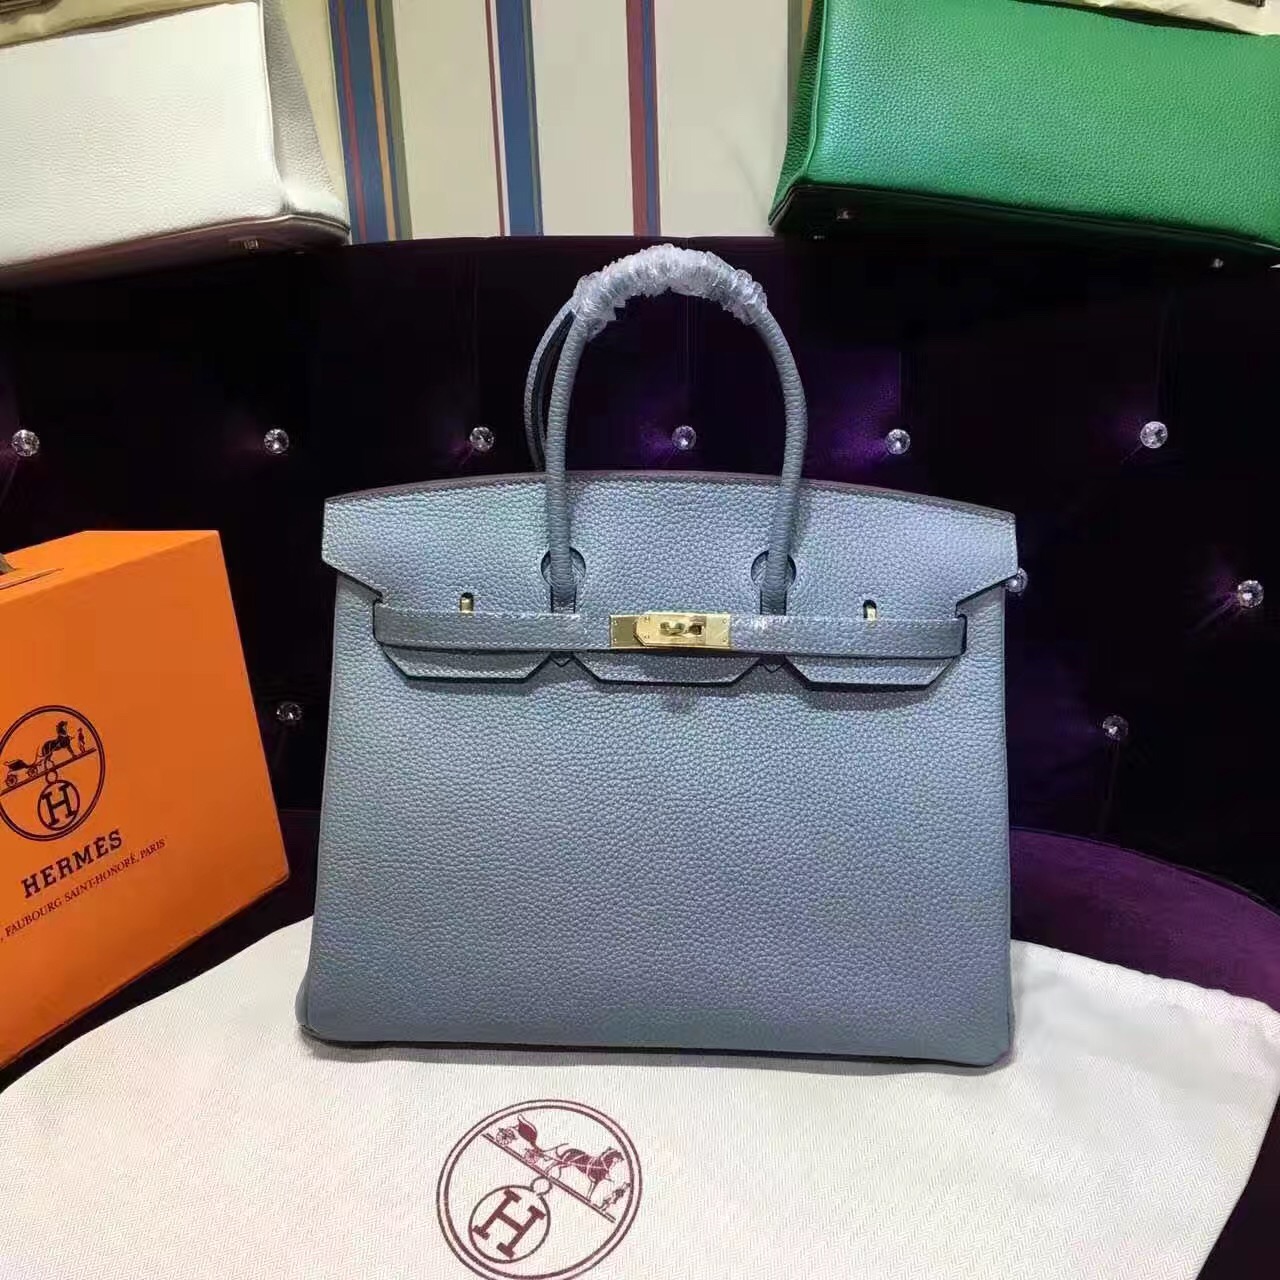 Hermes grain gray Birkin handbags